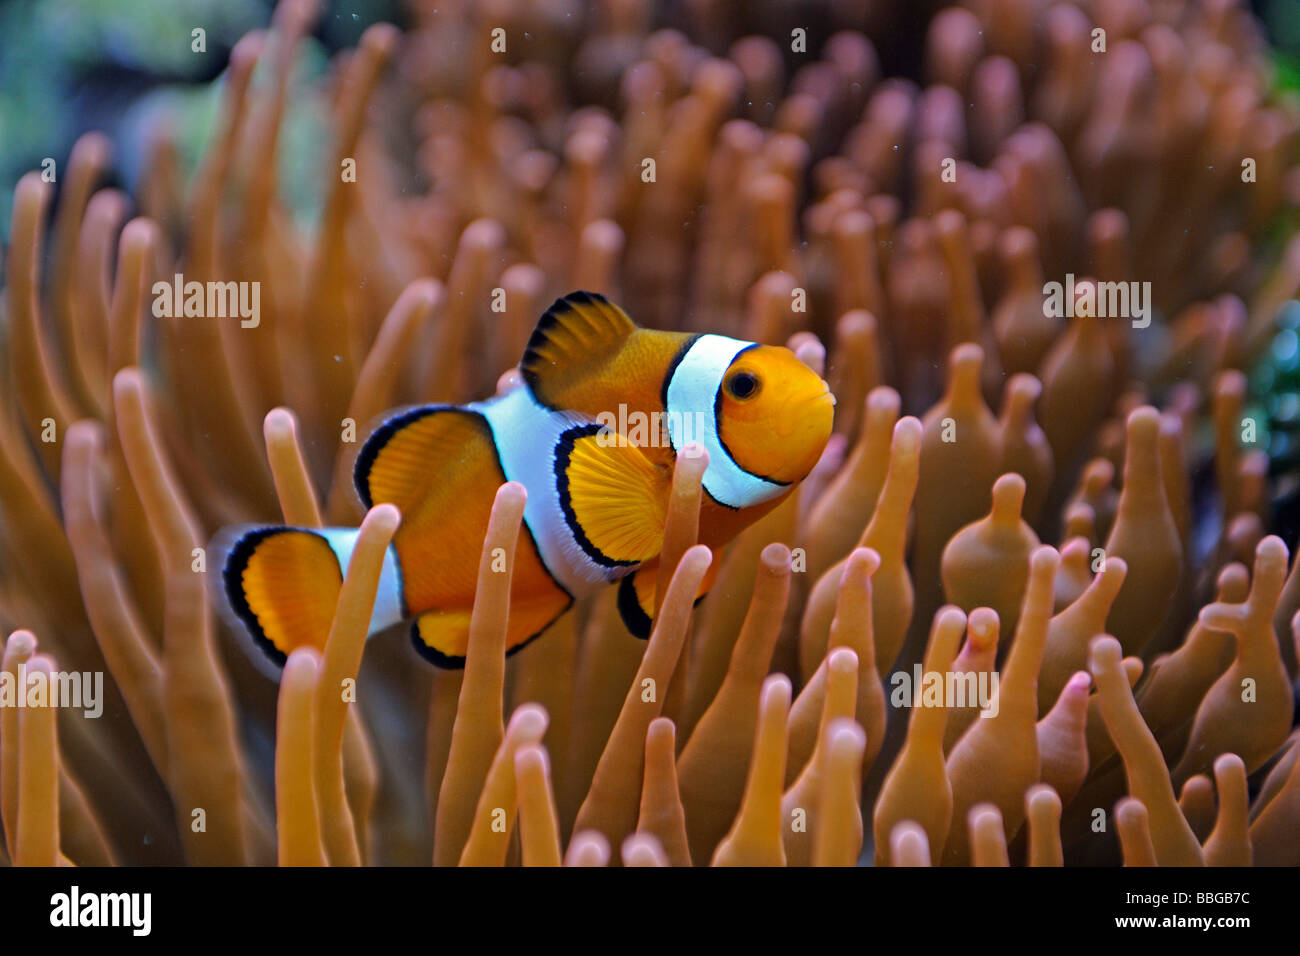 Clownfish (Amphiprion ocellaris), Nemo, in Anemone (Heteractis spec.) Stock Photo